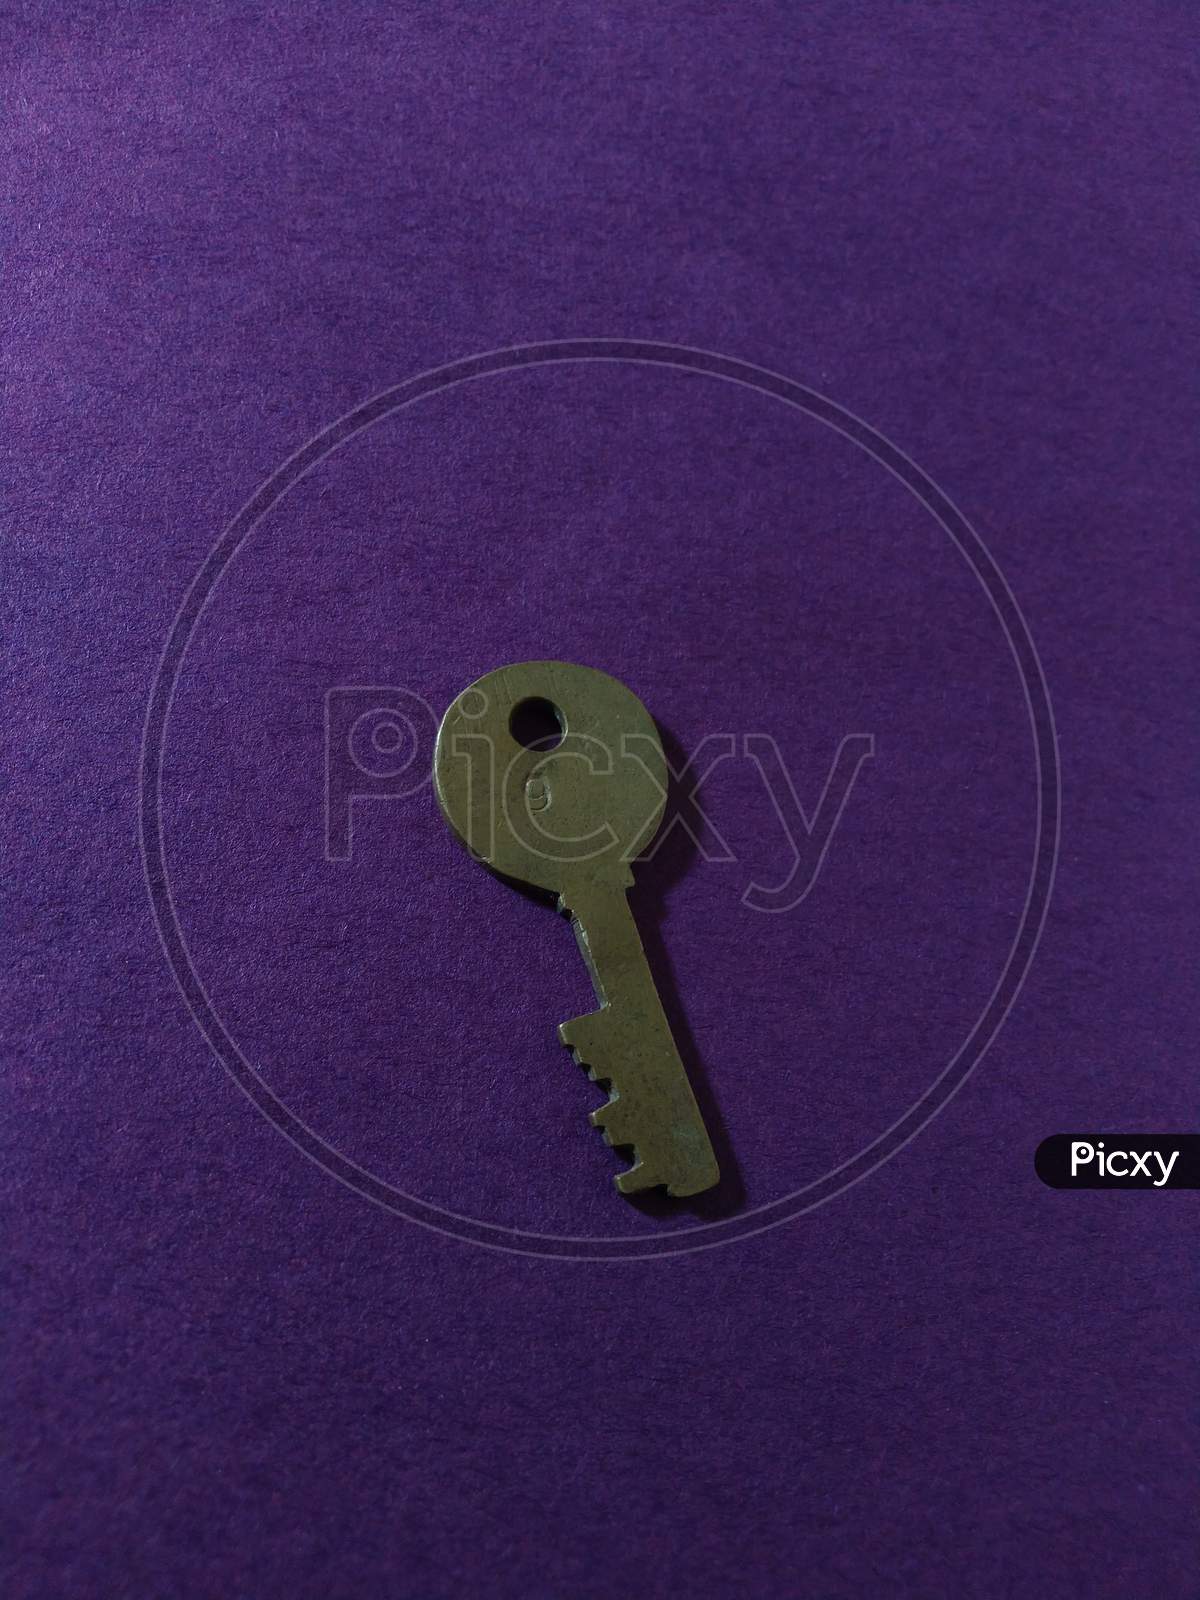 Key or group of keys